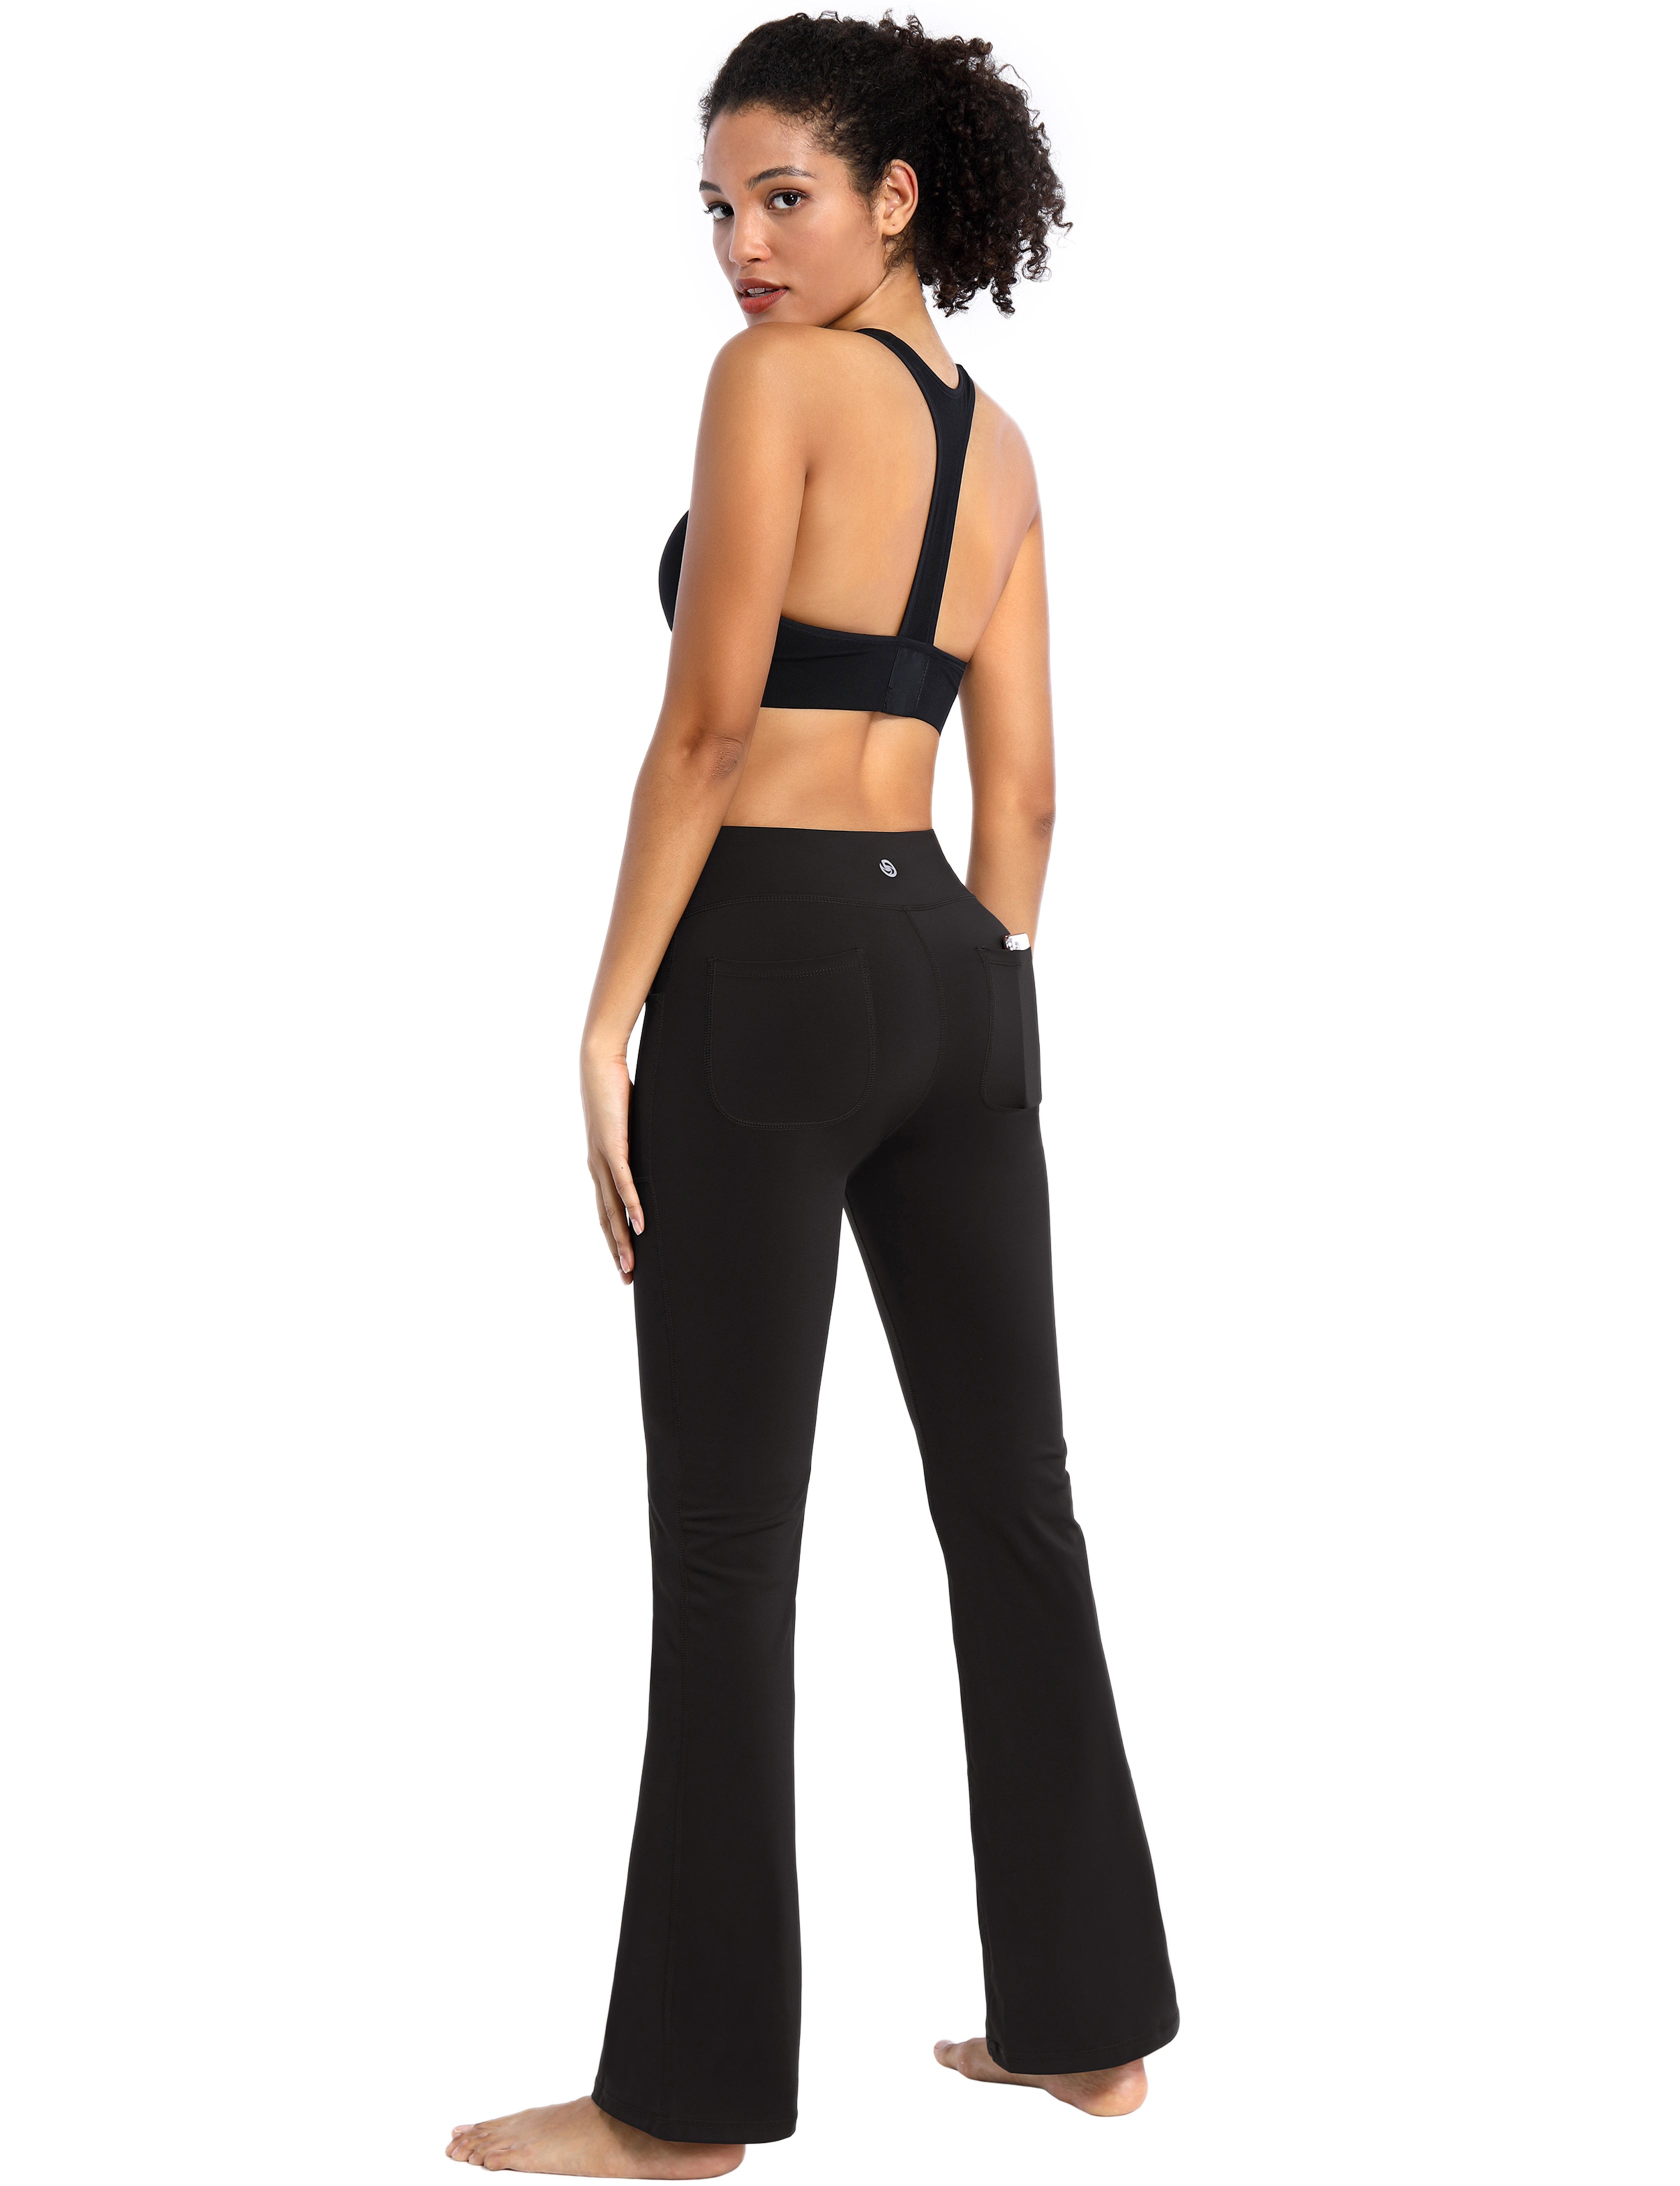  BUBBLELIME 29/31/33/35 4 Styles Womens Bootcut Yoga Pants  Tummy Control - Side PocketsBlack S33 Inseam